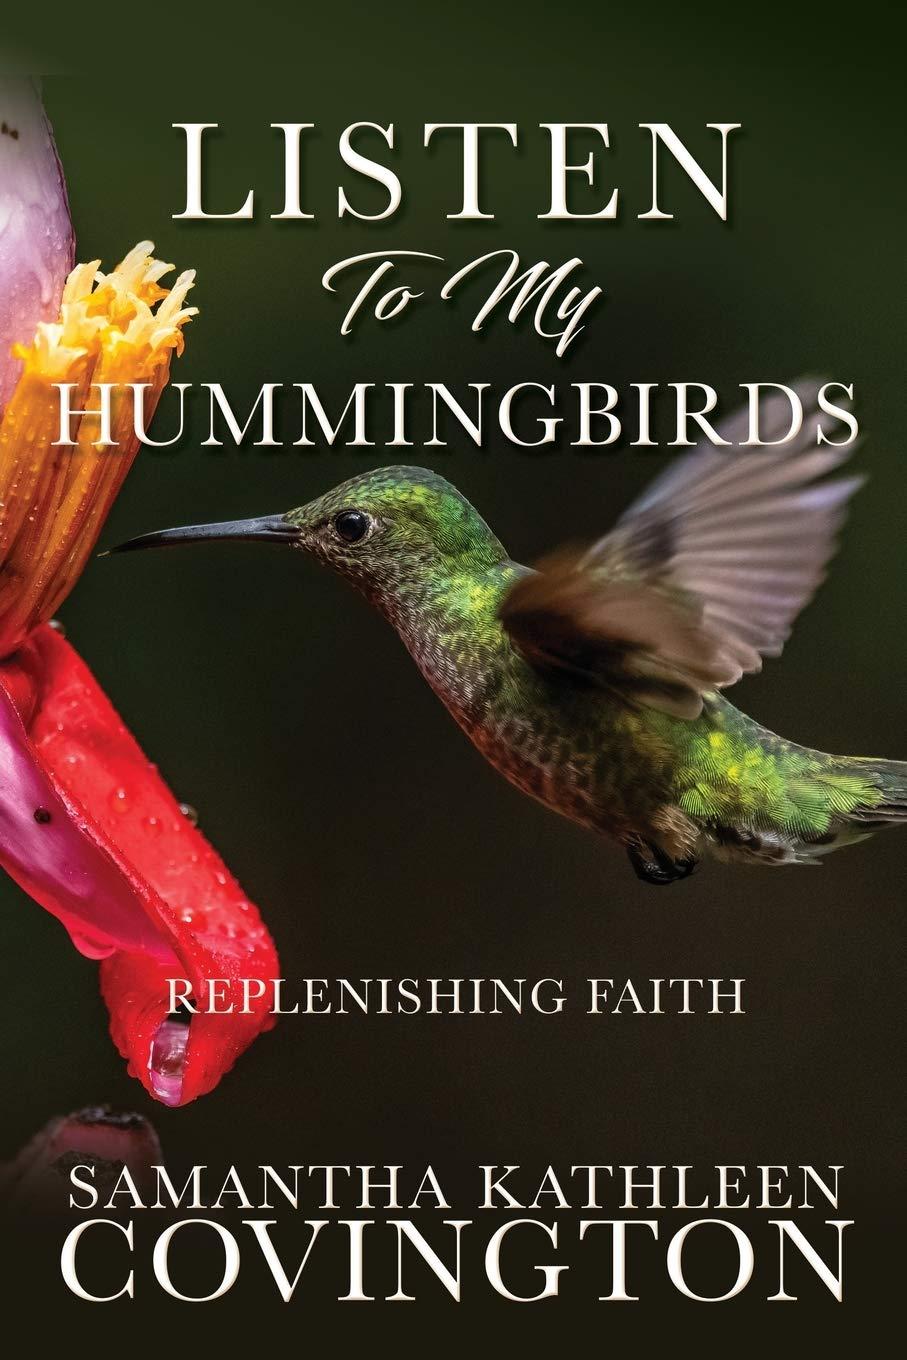 Listen to My Hummingbirds: Replenishing Faith - Samantha Kathleen Covington